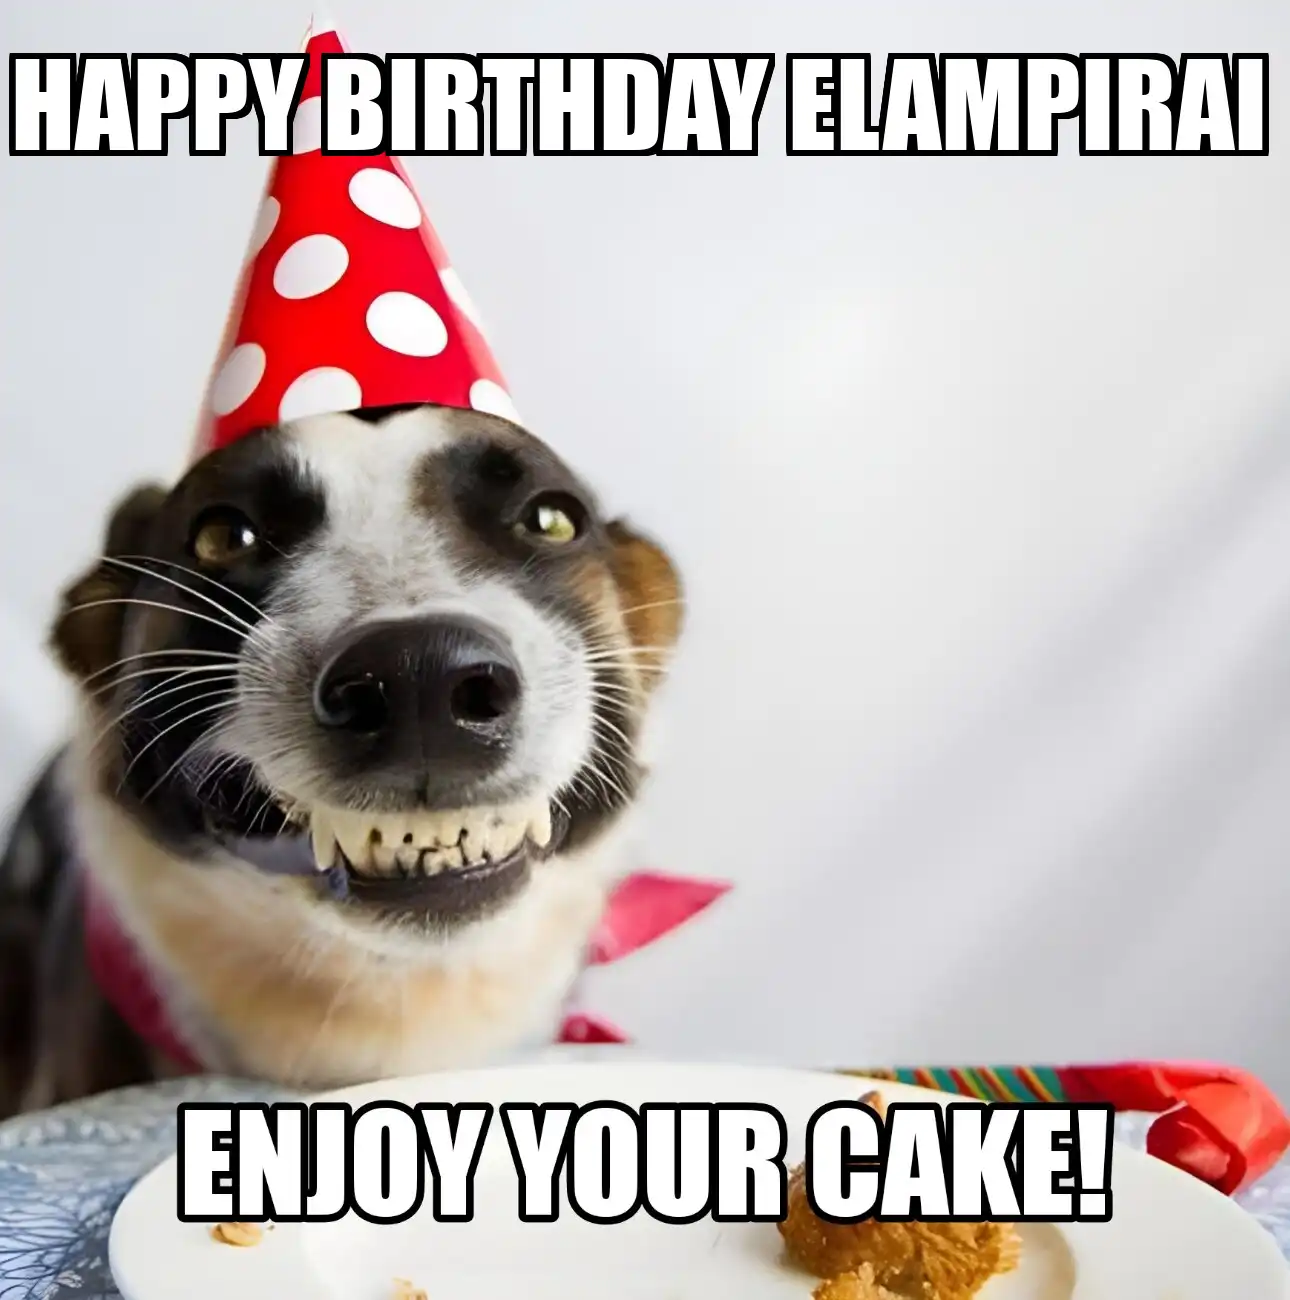 Happy Birthday Elampirai Enjoy Your Cake Dog Meme